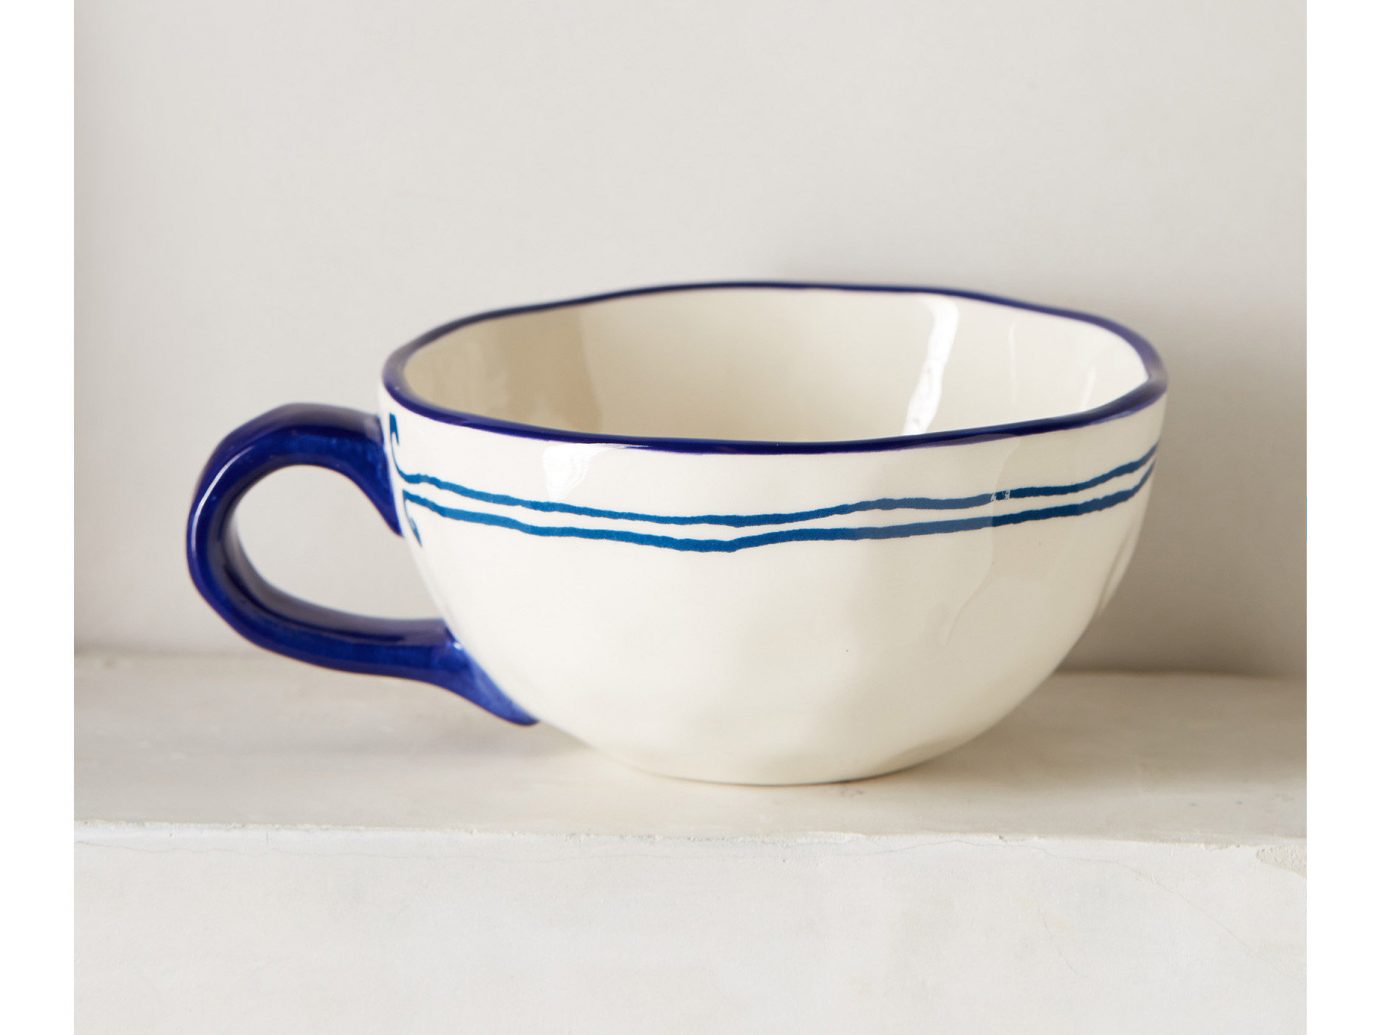 Style + Design indoor bowl cup saucer coffee cup tableware mug ceramic drinkware mixing bowl serveware porcelain dishware ceramic ware teacup